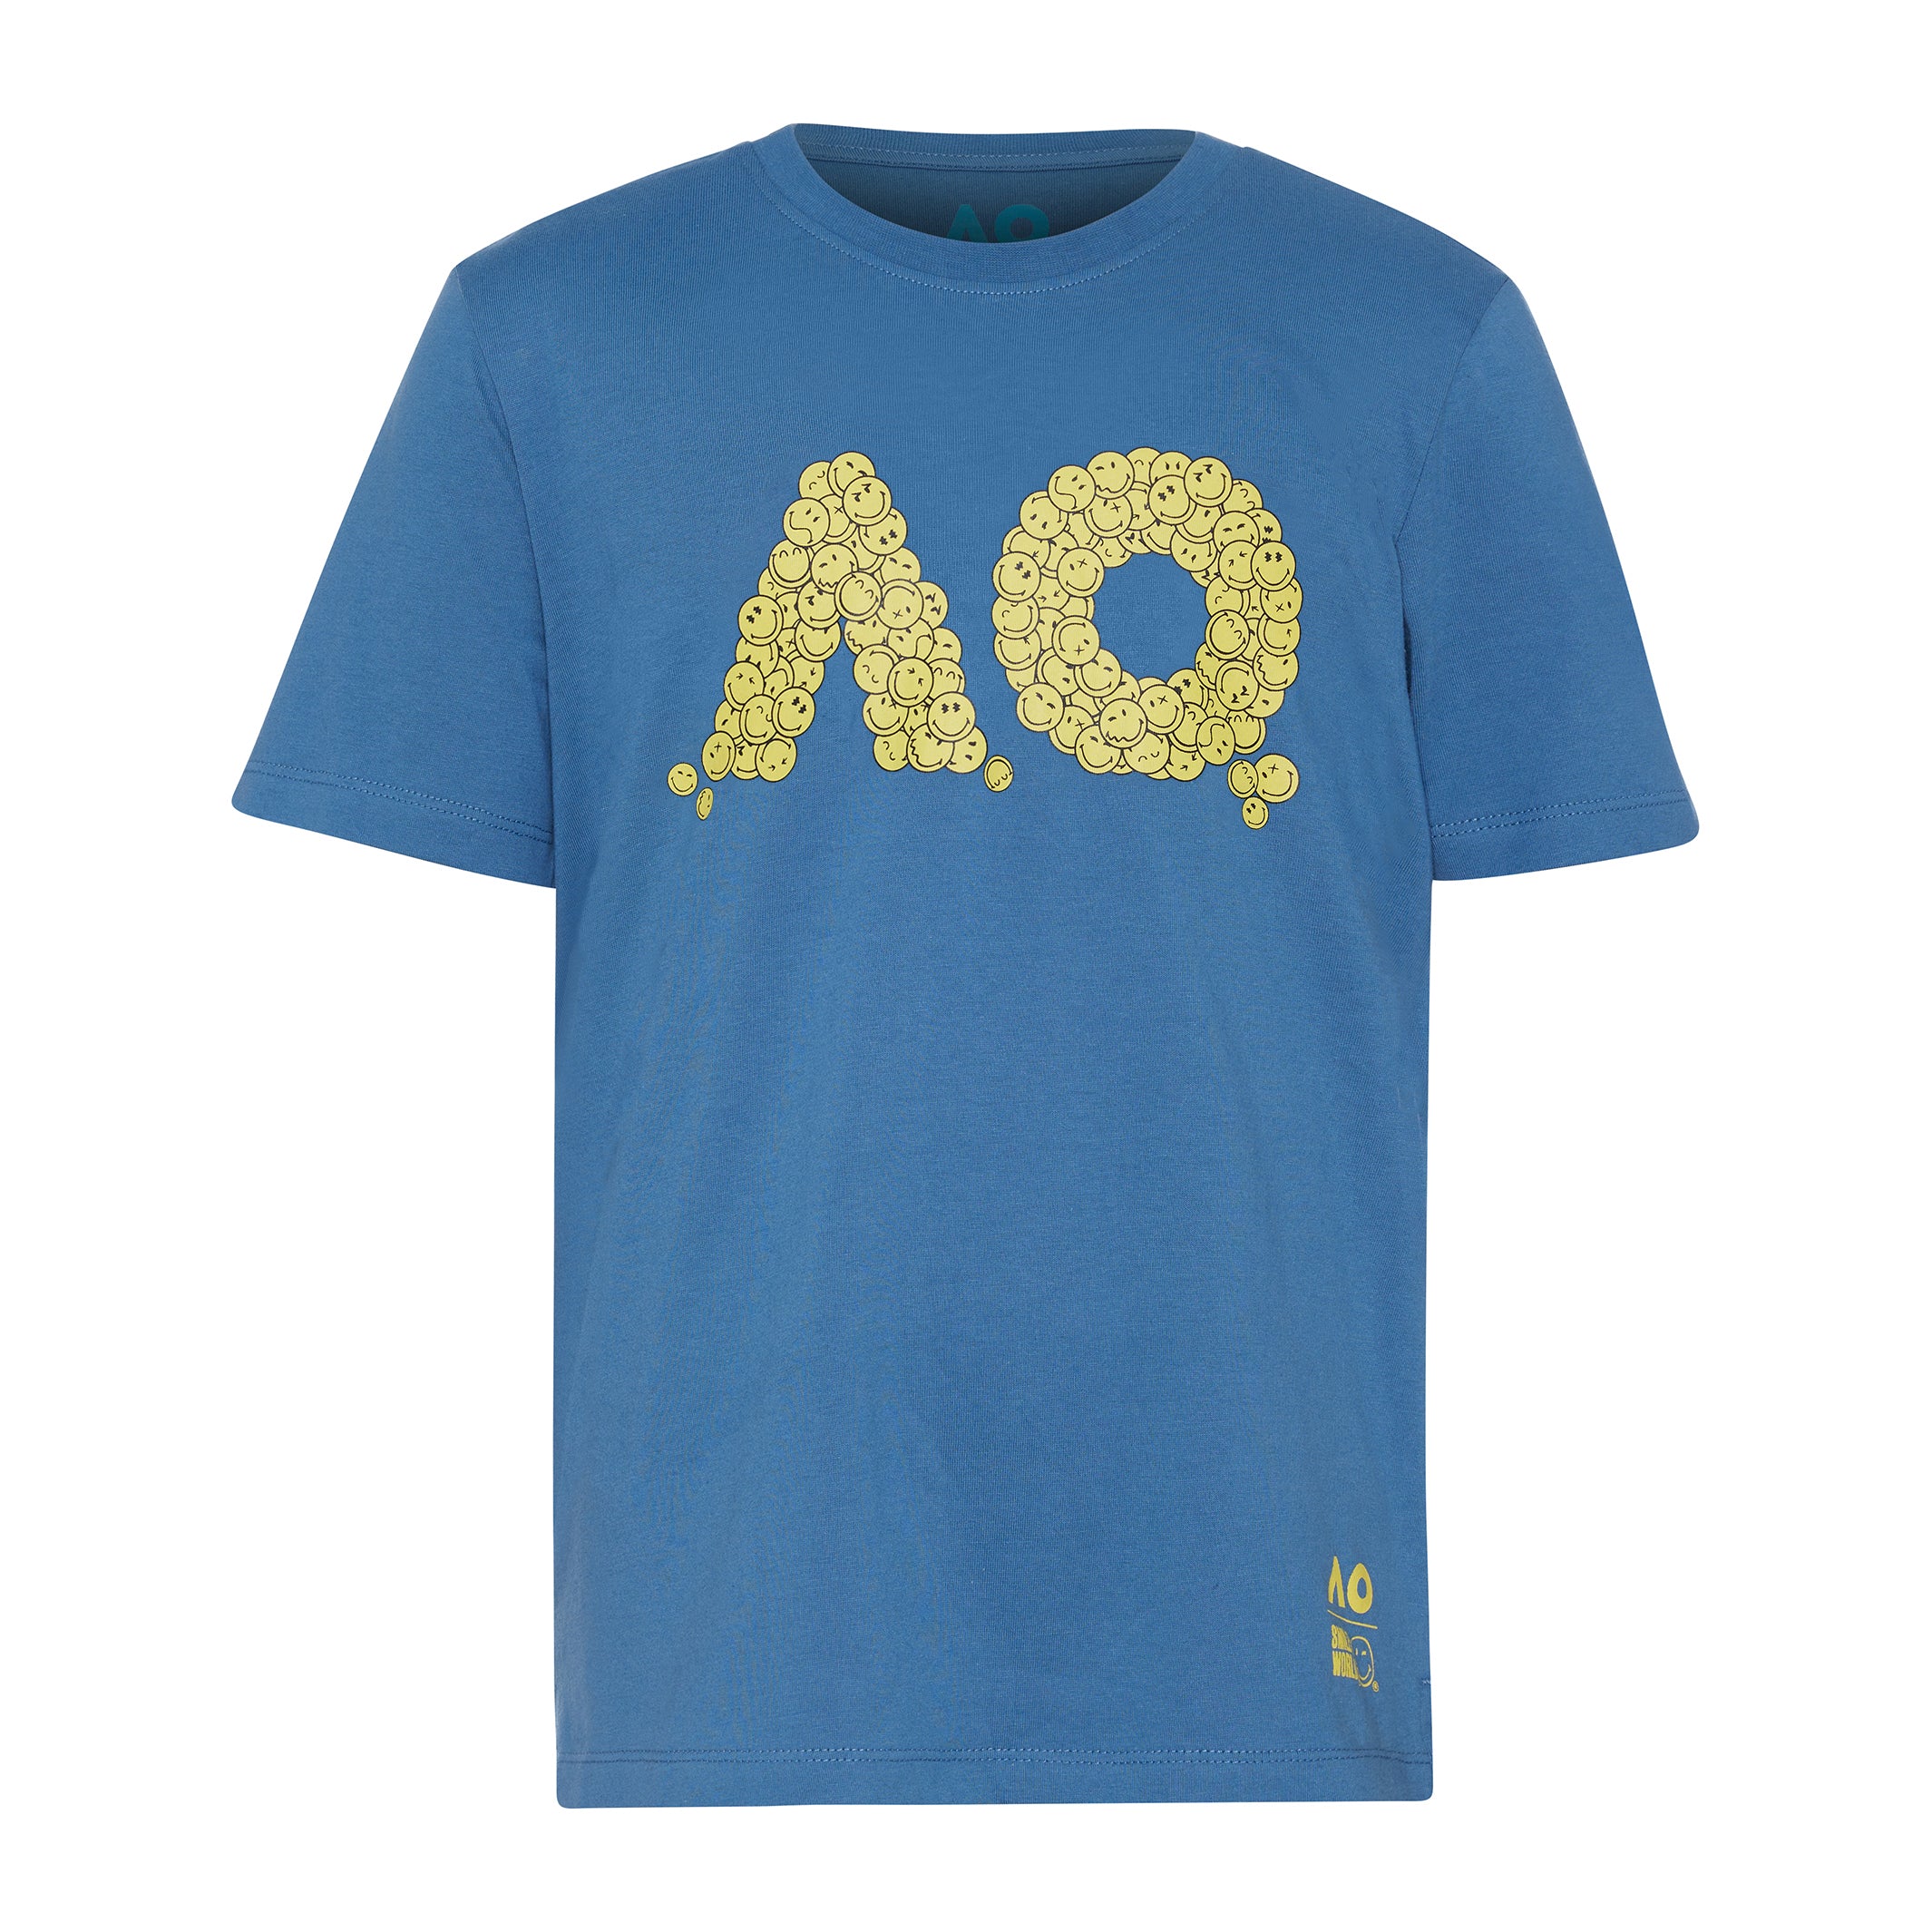 Boy's Blue T-Shirt SmileyWorld AO Logo Front View